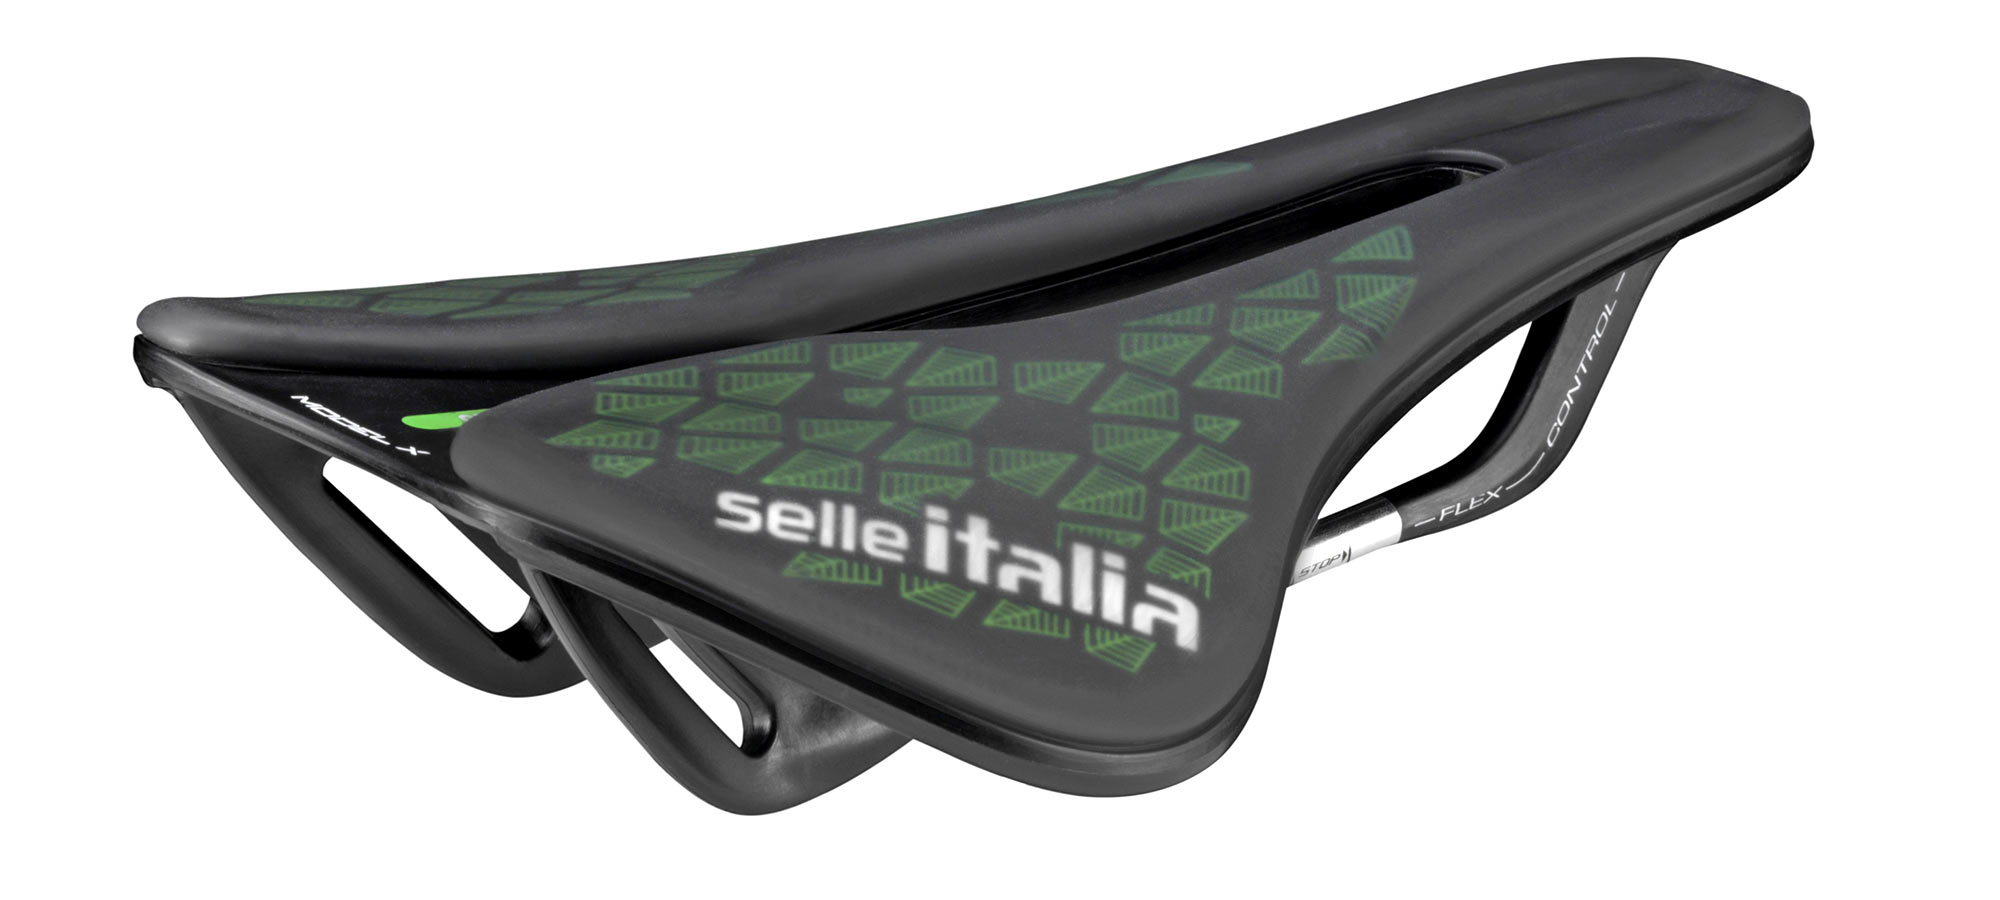 Selle Italia Model X Leaf affordable eco bike saddle, angled